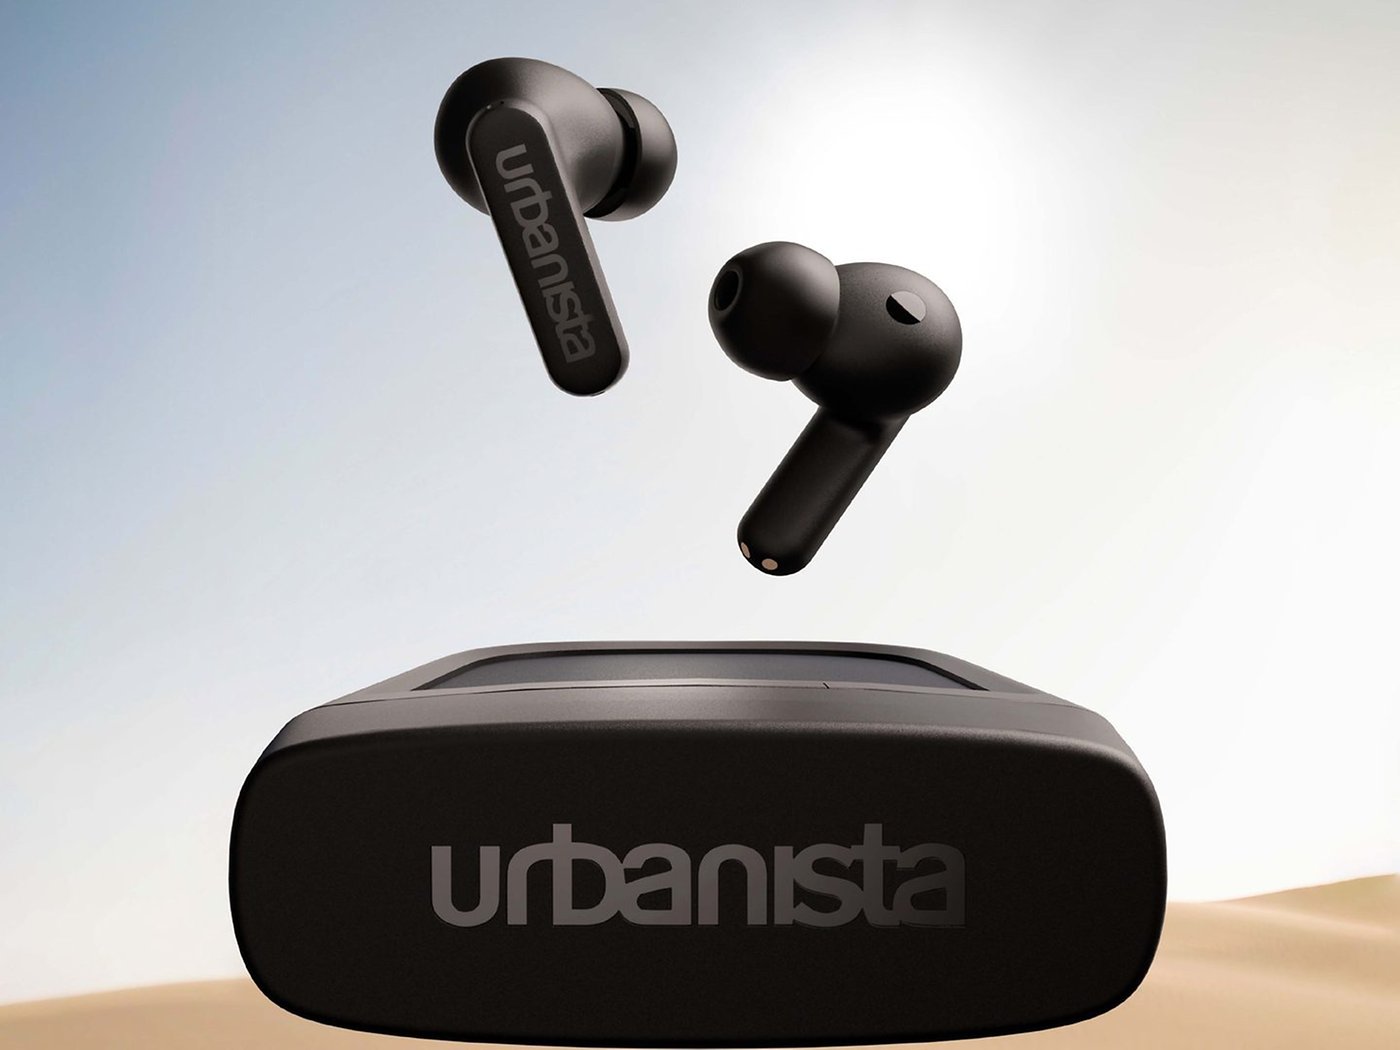 Urbanista Los Angeles self-charging headphone review